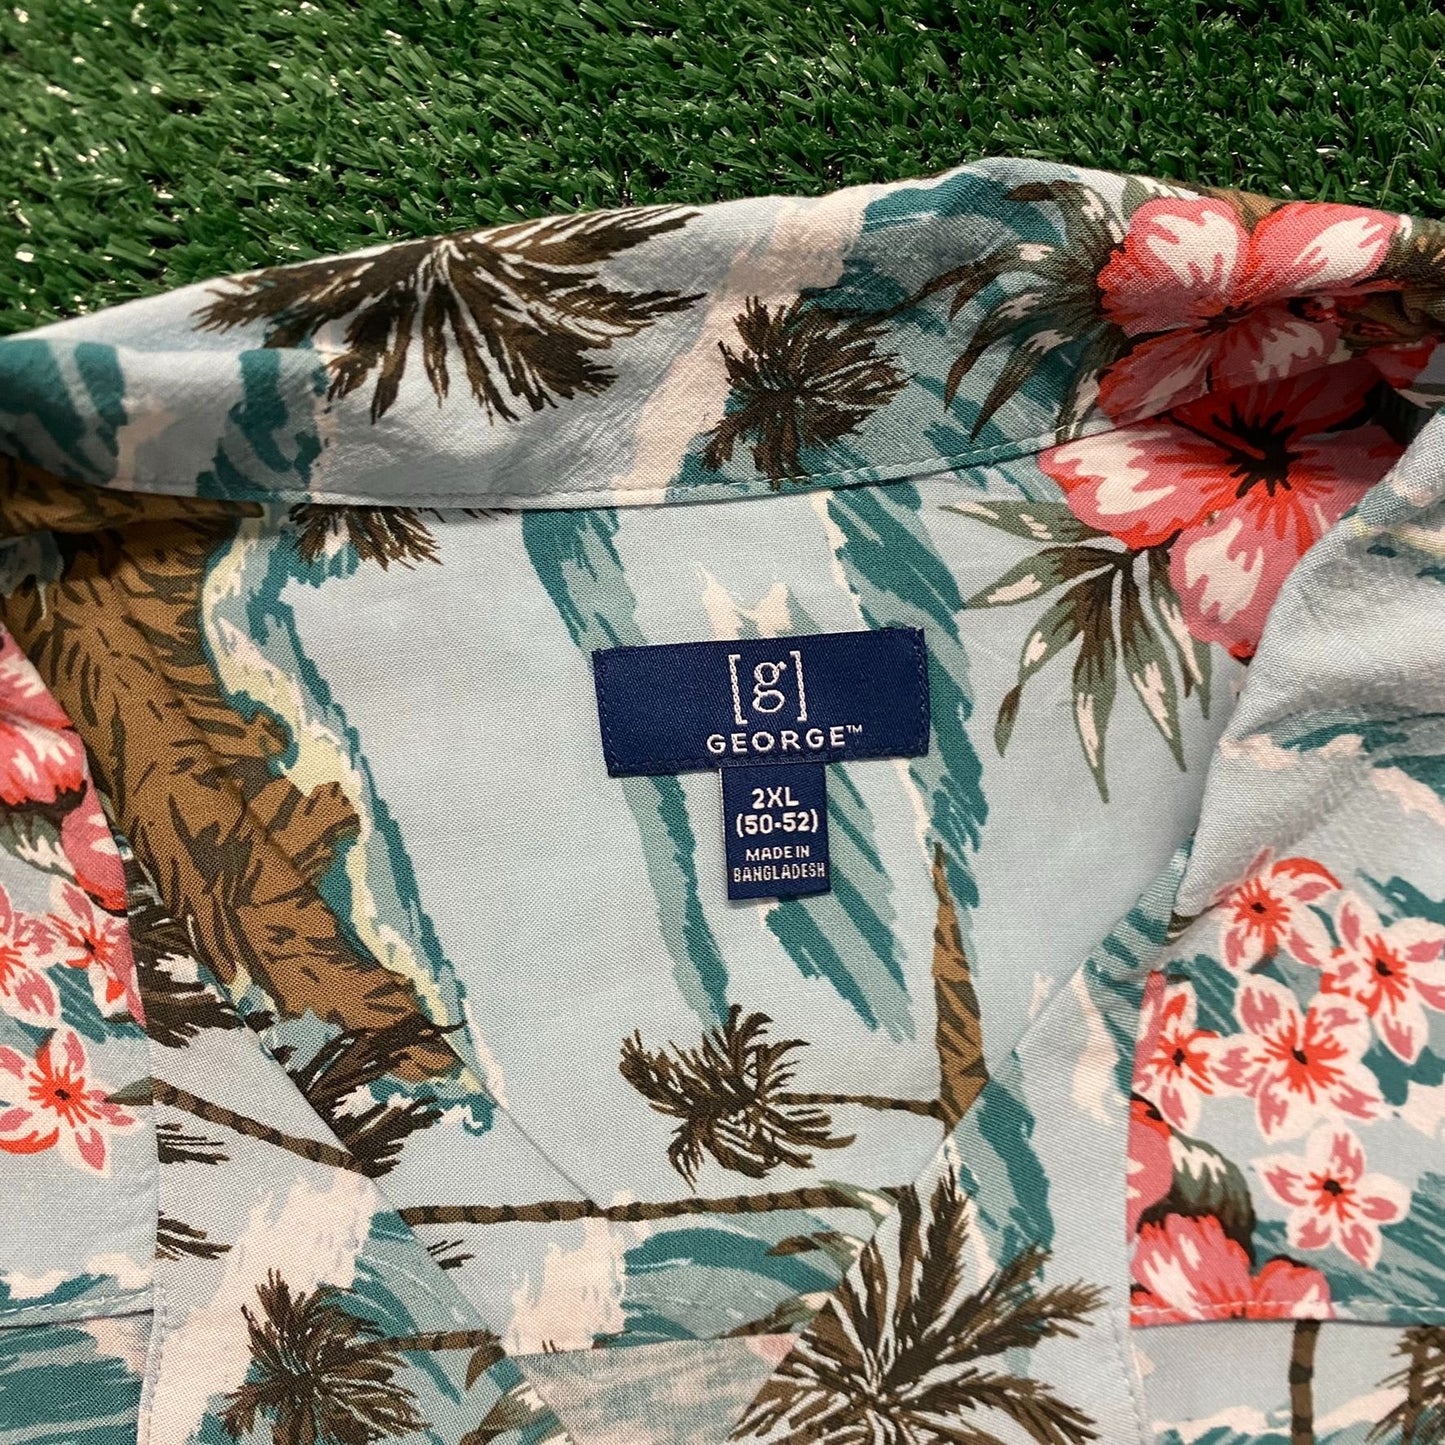 Pastel Floral Beach Vintage Button Up Hawaiian Shirt